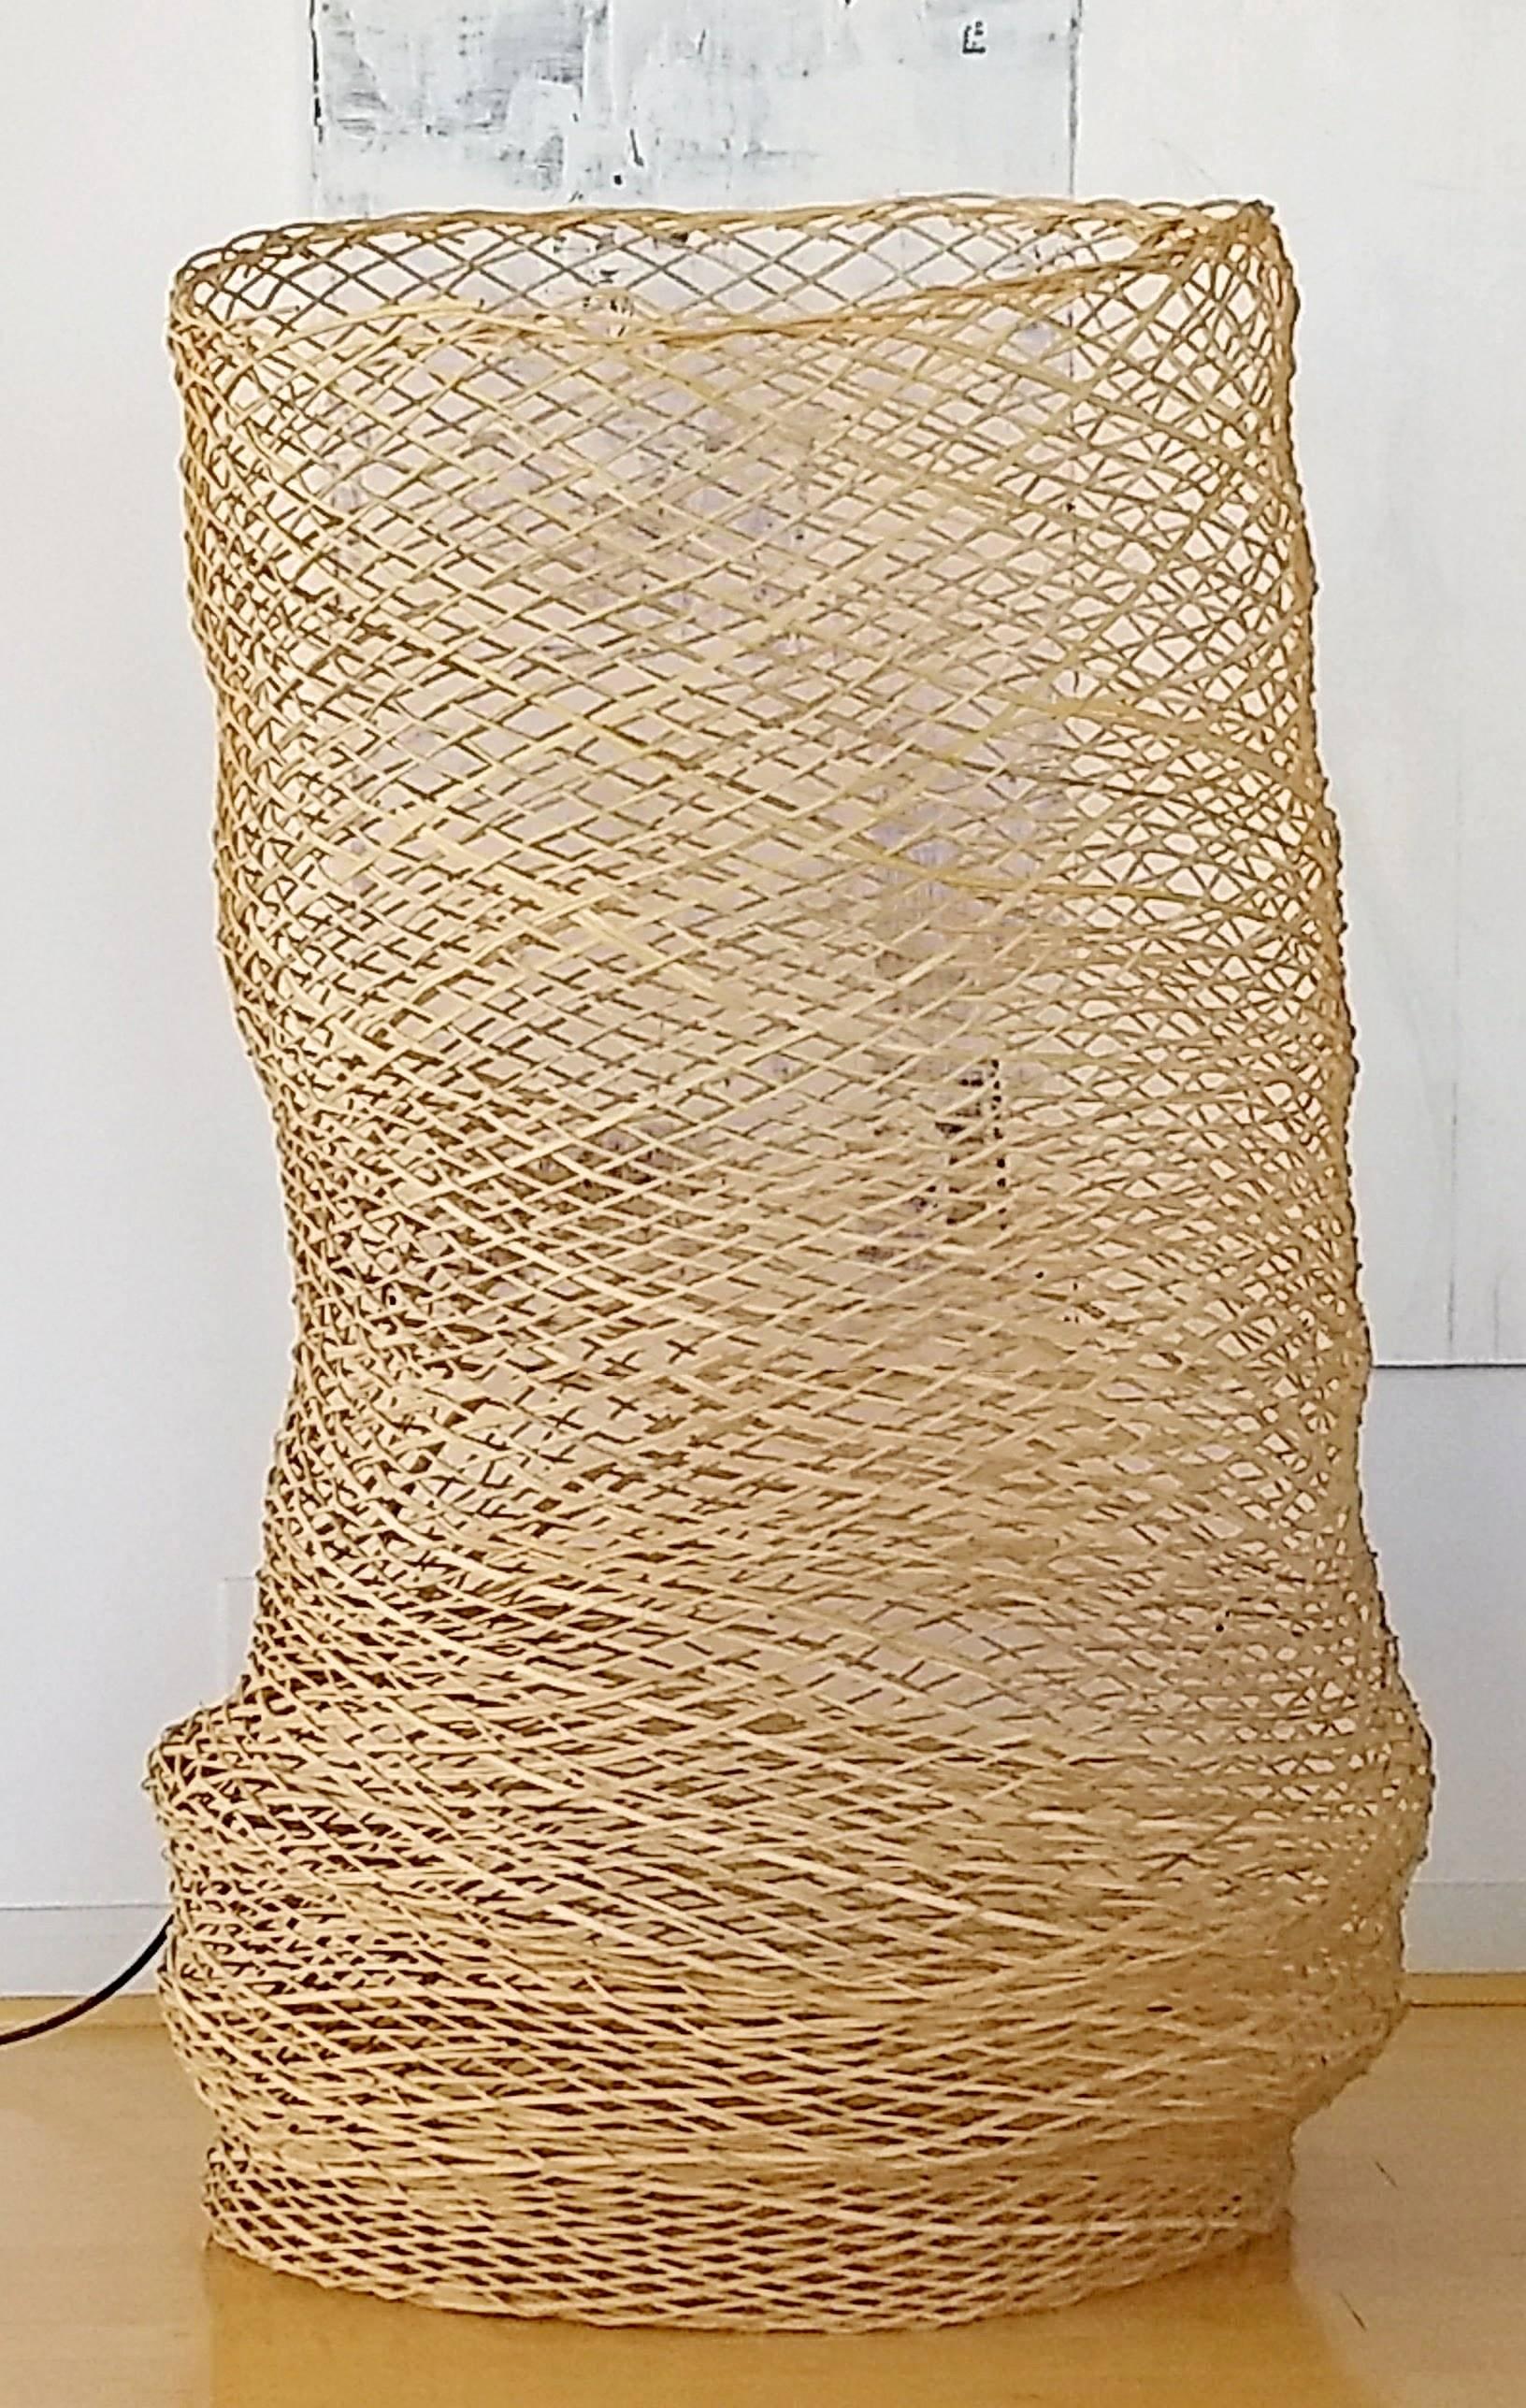 American Linda Kelly Contemporary Woven Basket Standing Floor Art Sculpture